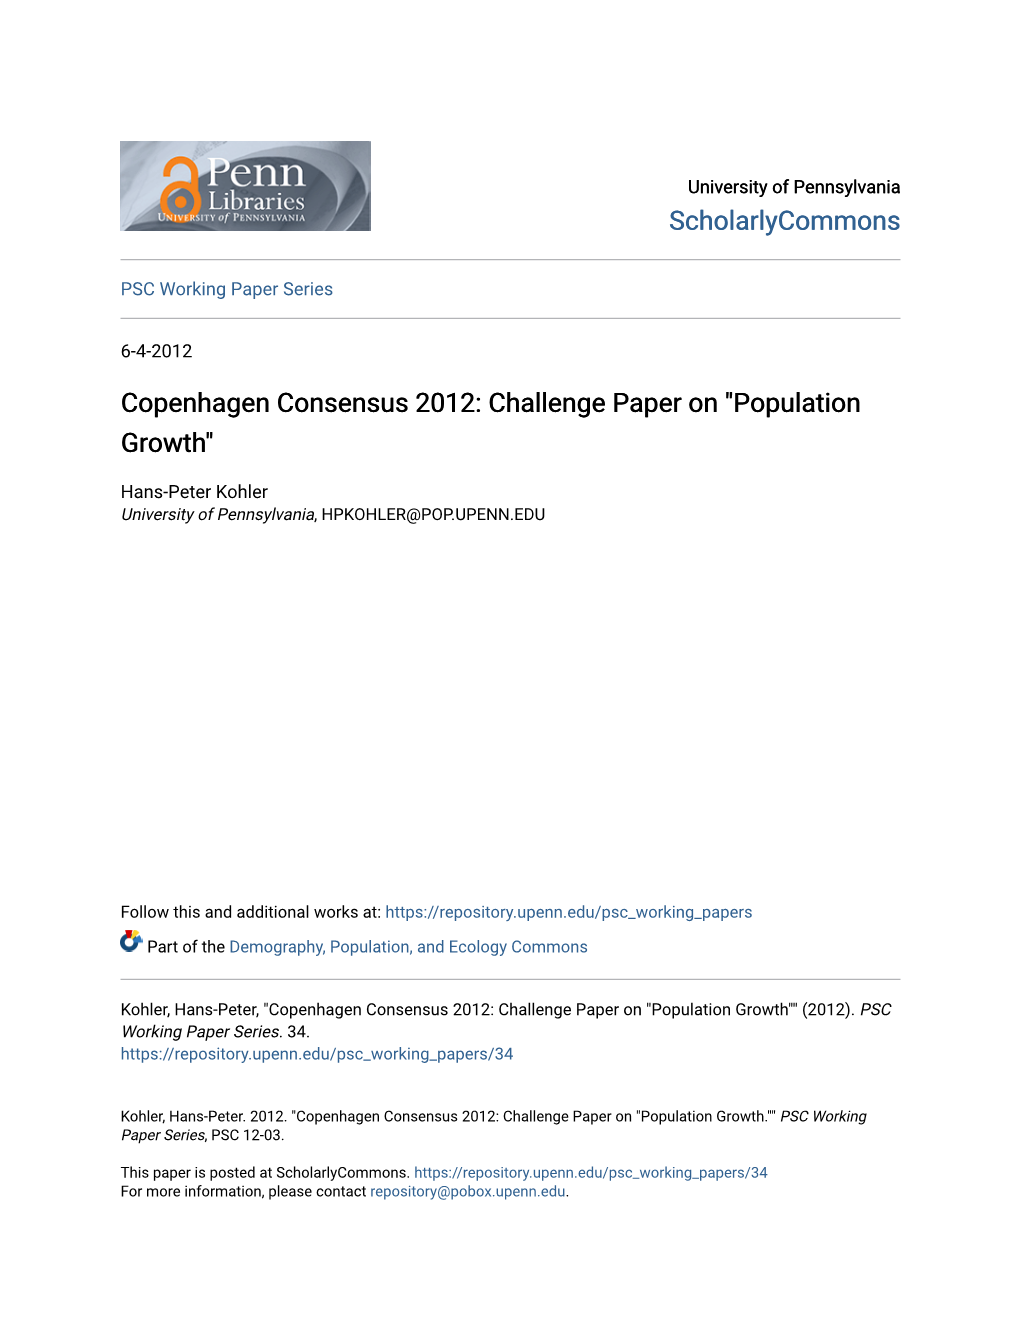 Copenhagen Consensus 2012: Challenge Paper on "Population Growth"